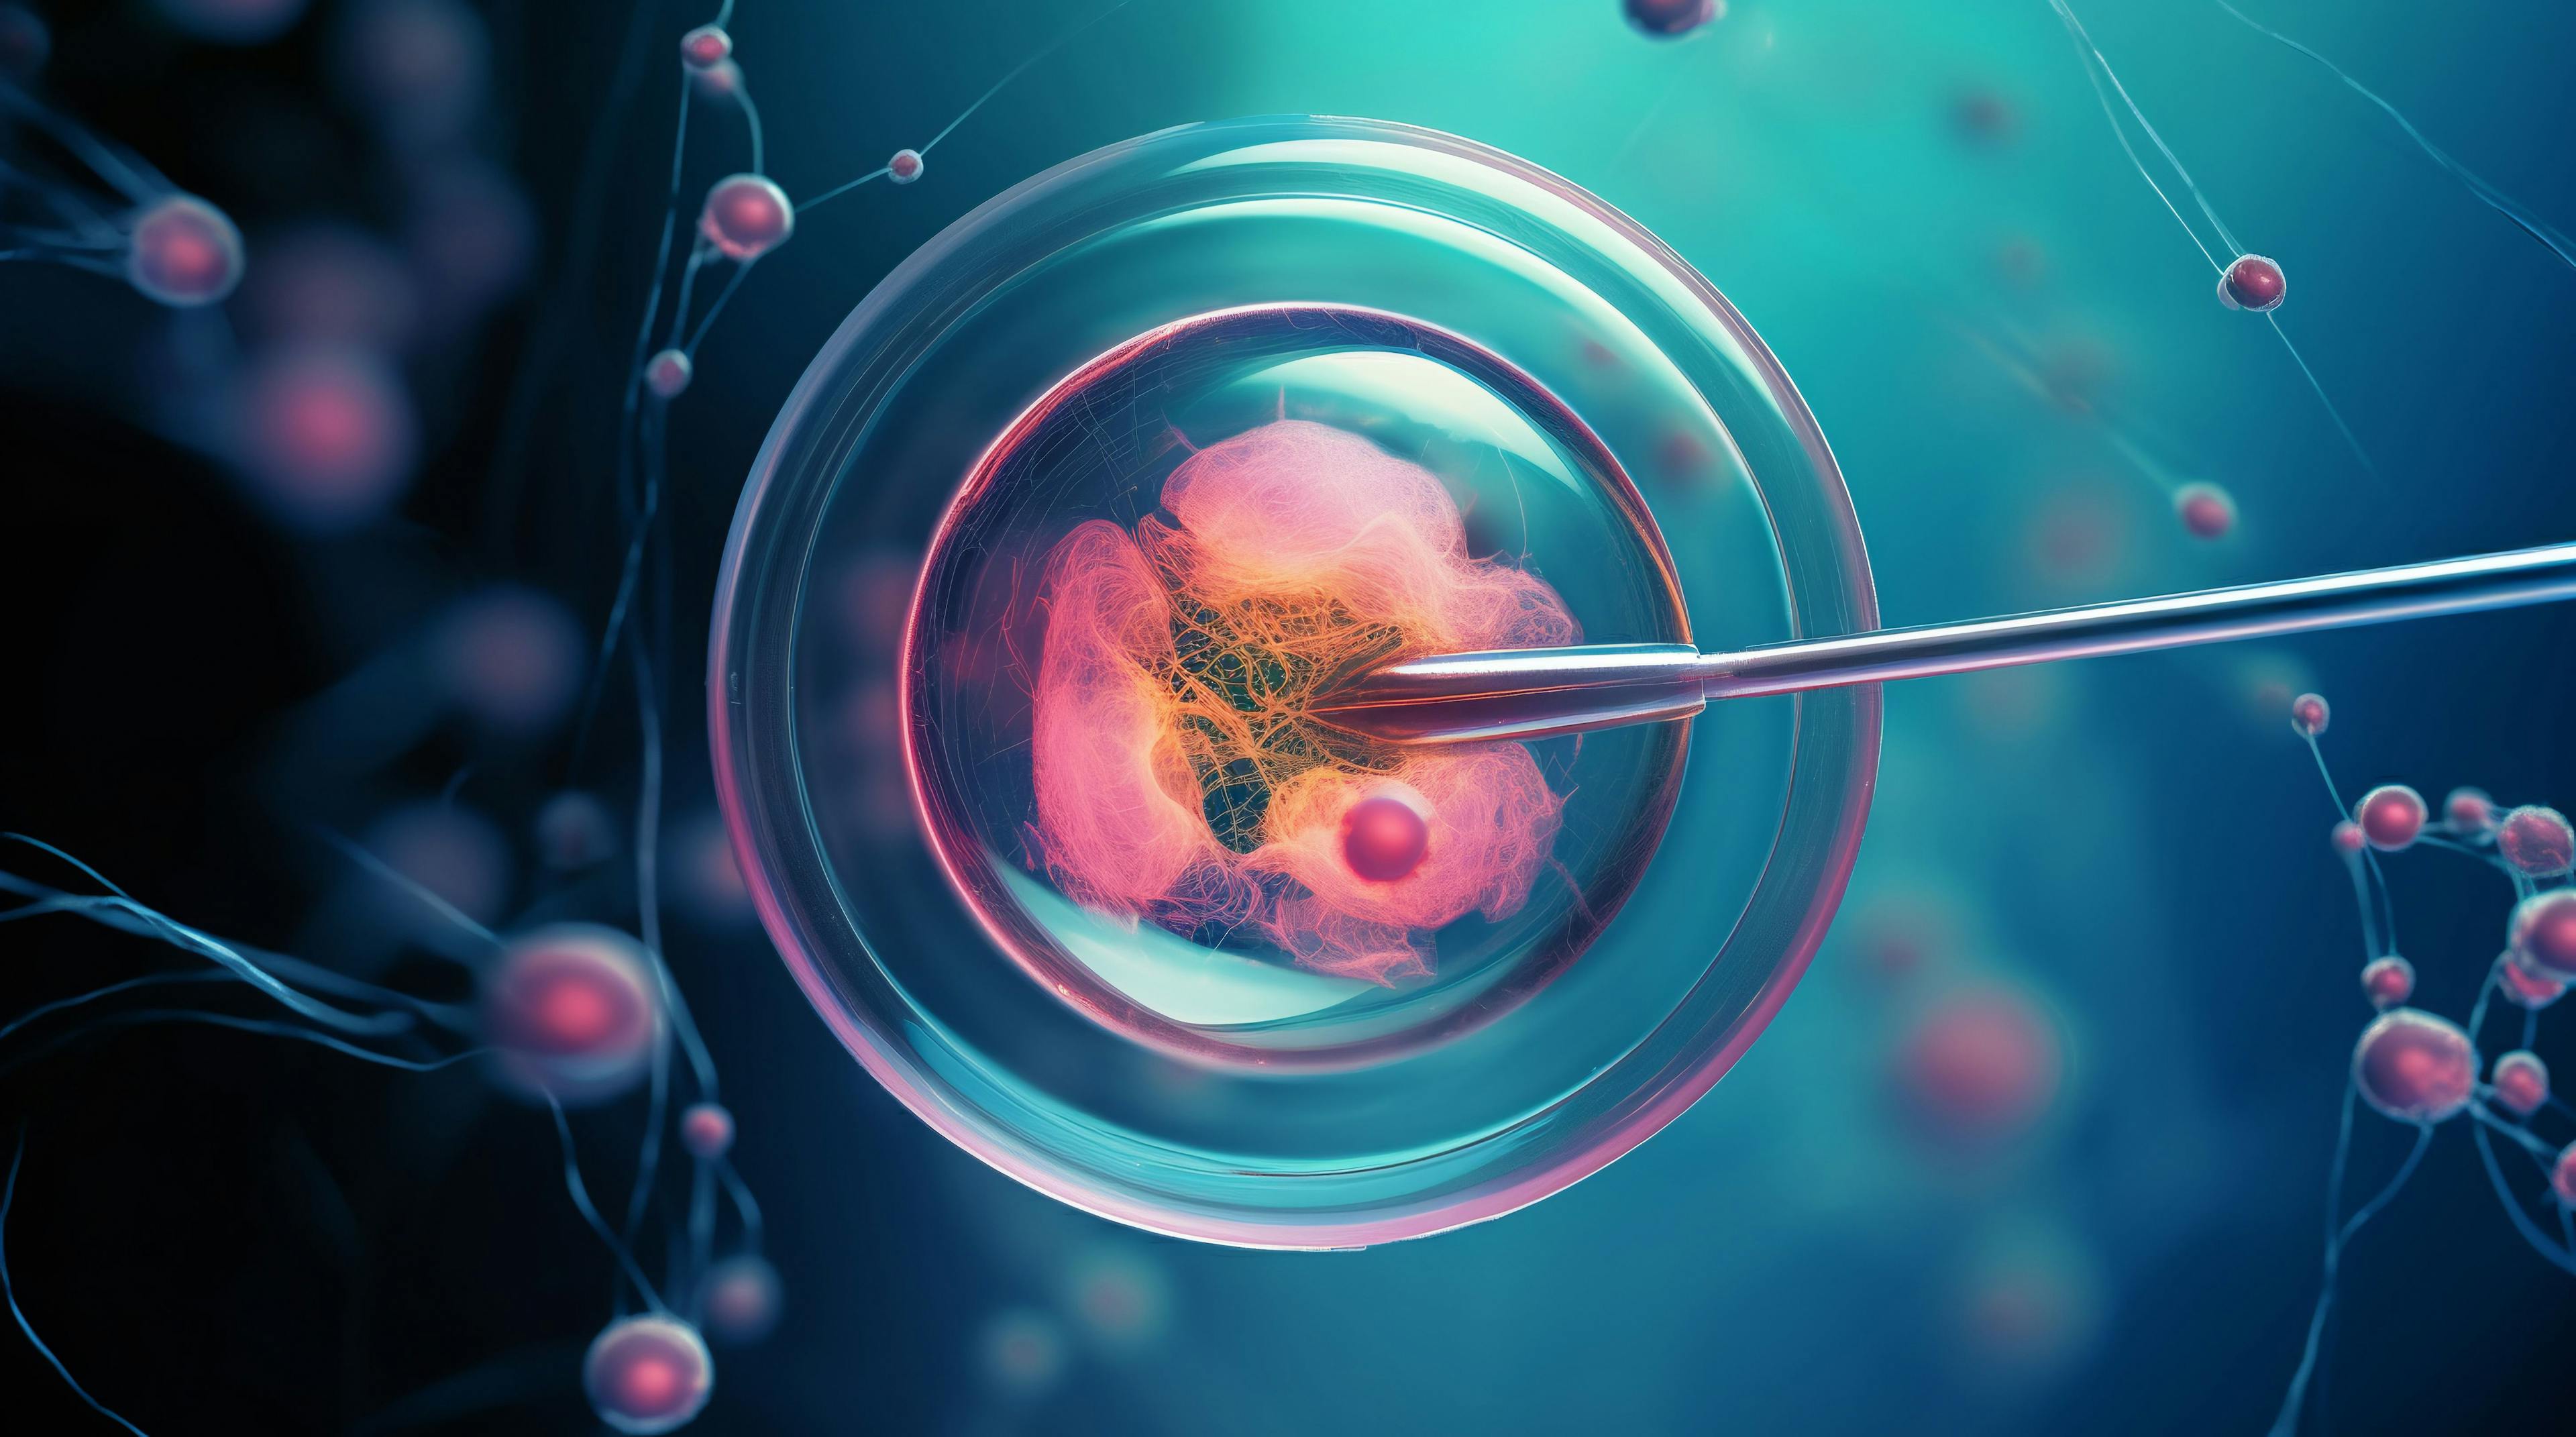 IVF, In vitro fertilization. Fertilized egg cell and needle realistic illustration | grethental - stock.adobe.com